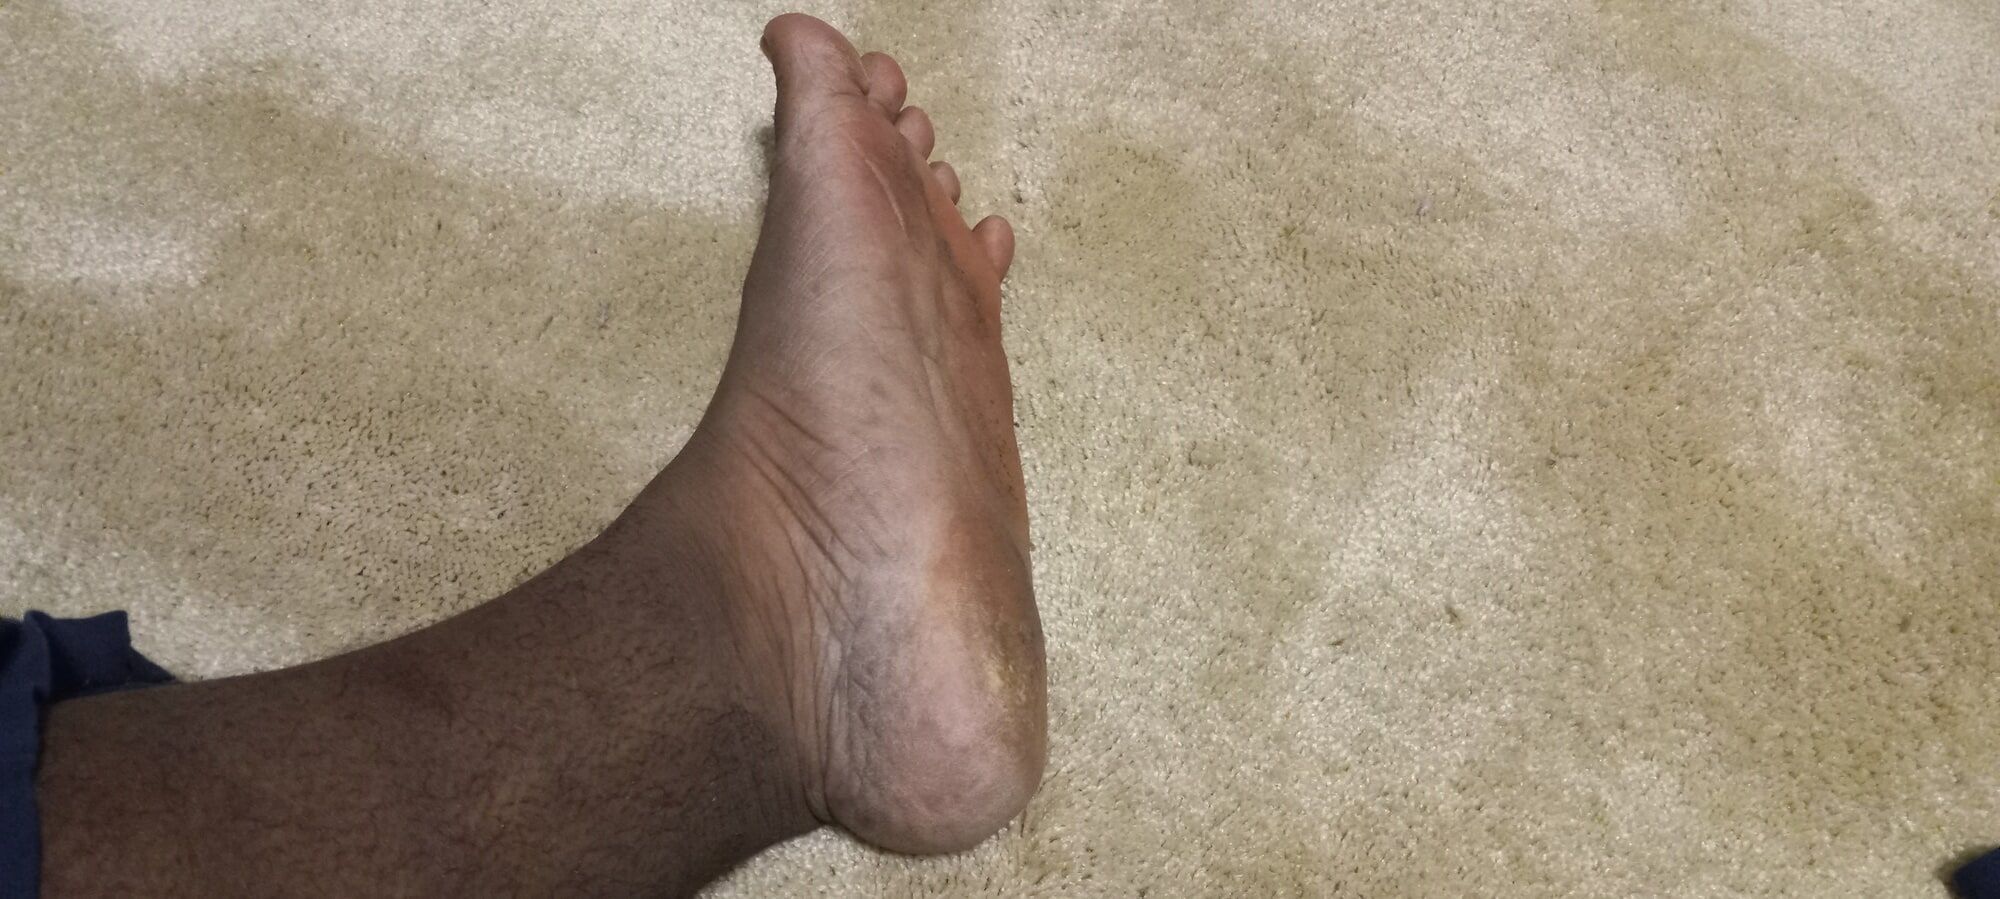 Pics of my Feet #11